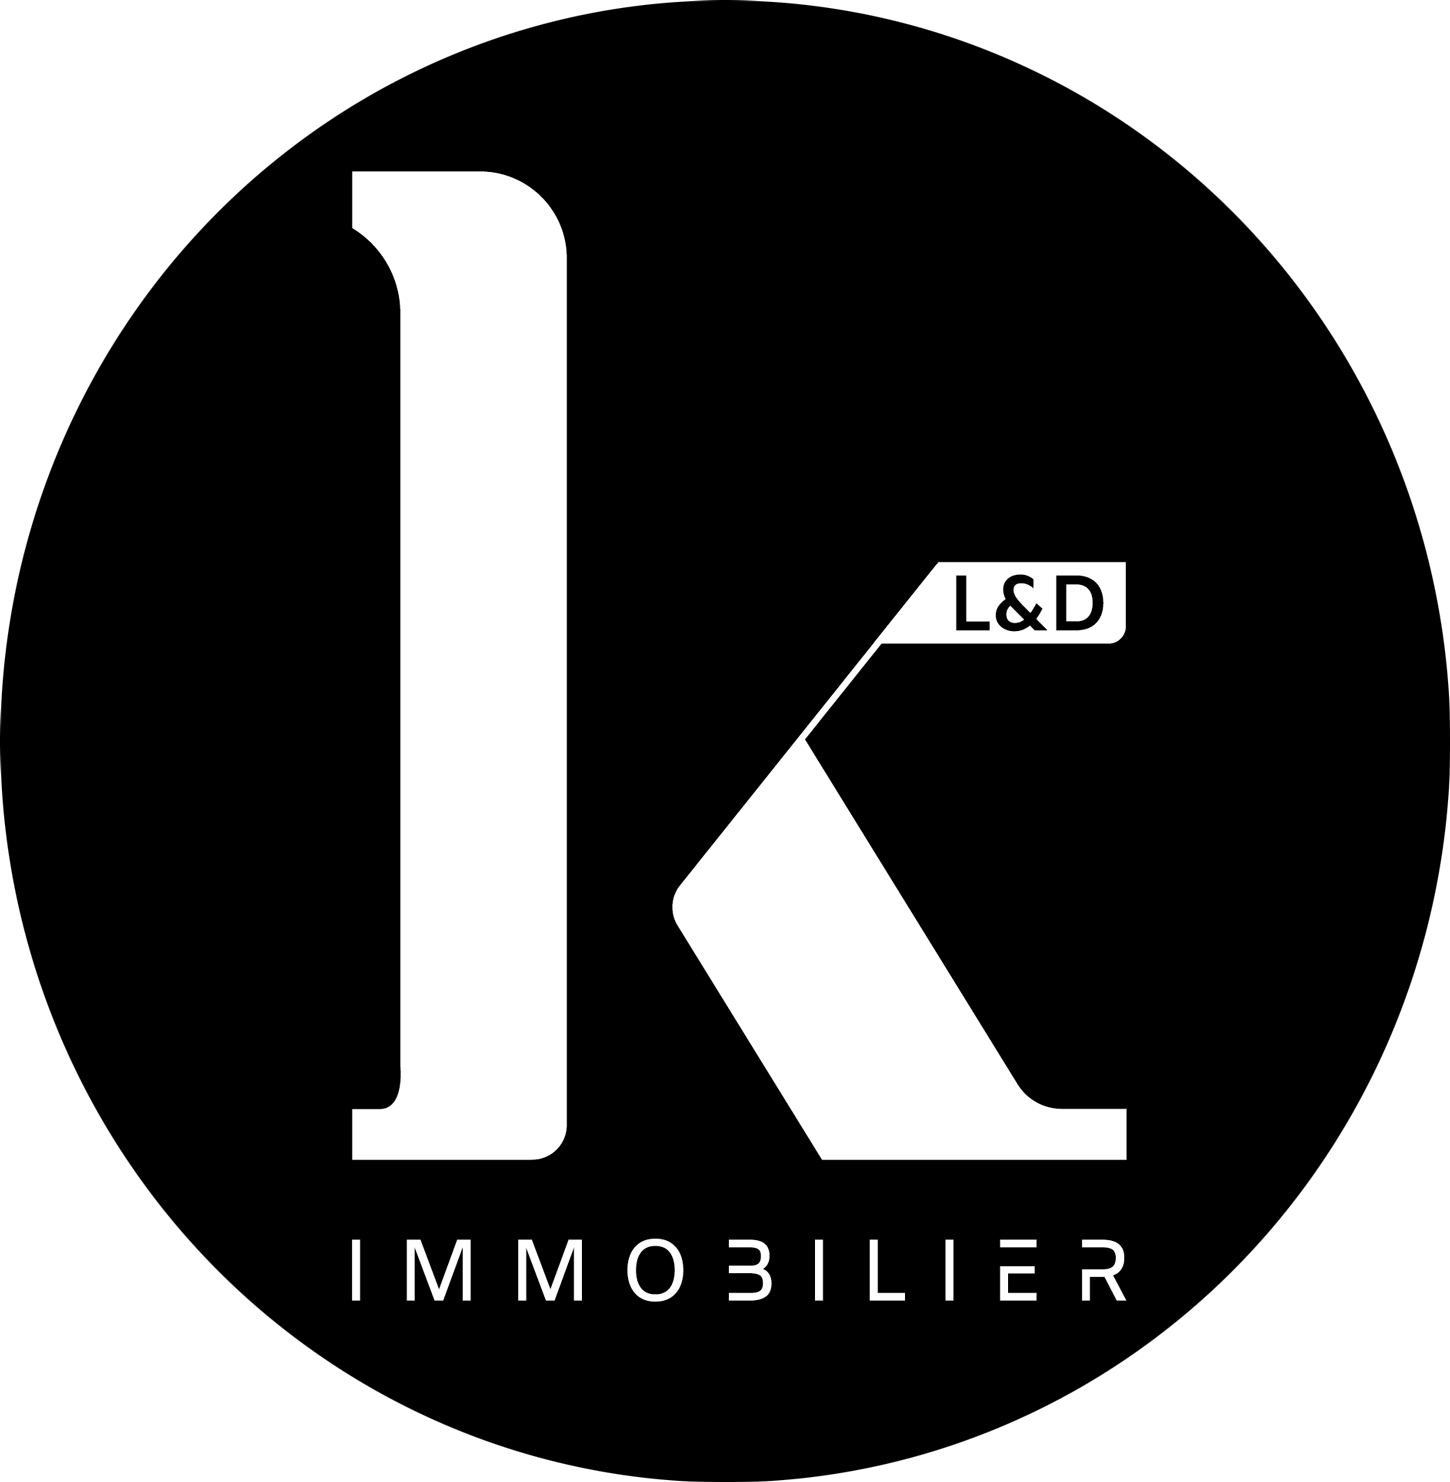 KL&D IMMOBILIER